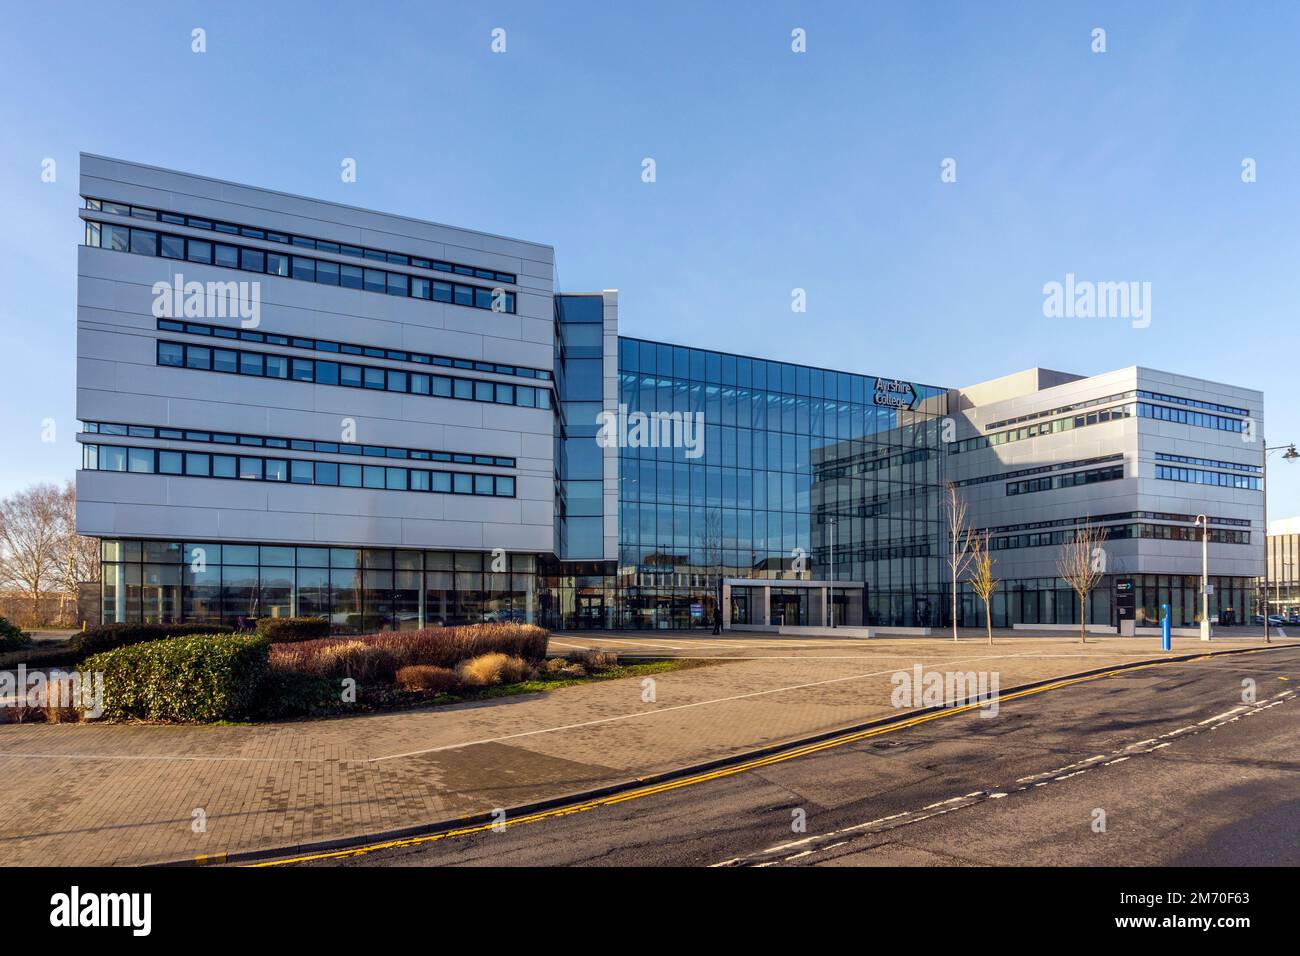 Ayrshire College of further Education, Kilmarnock, Ayrshire, Scotland, UK Stock Photo